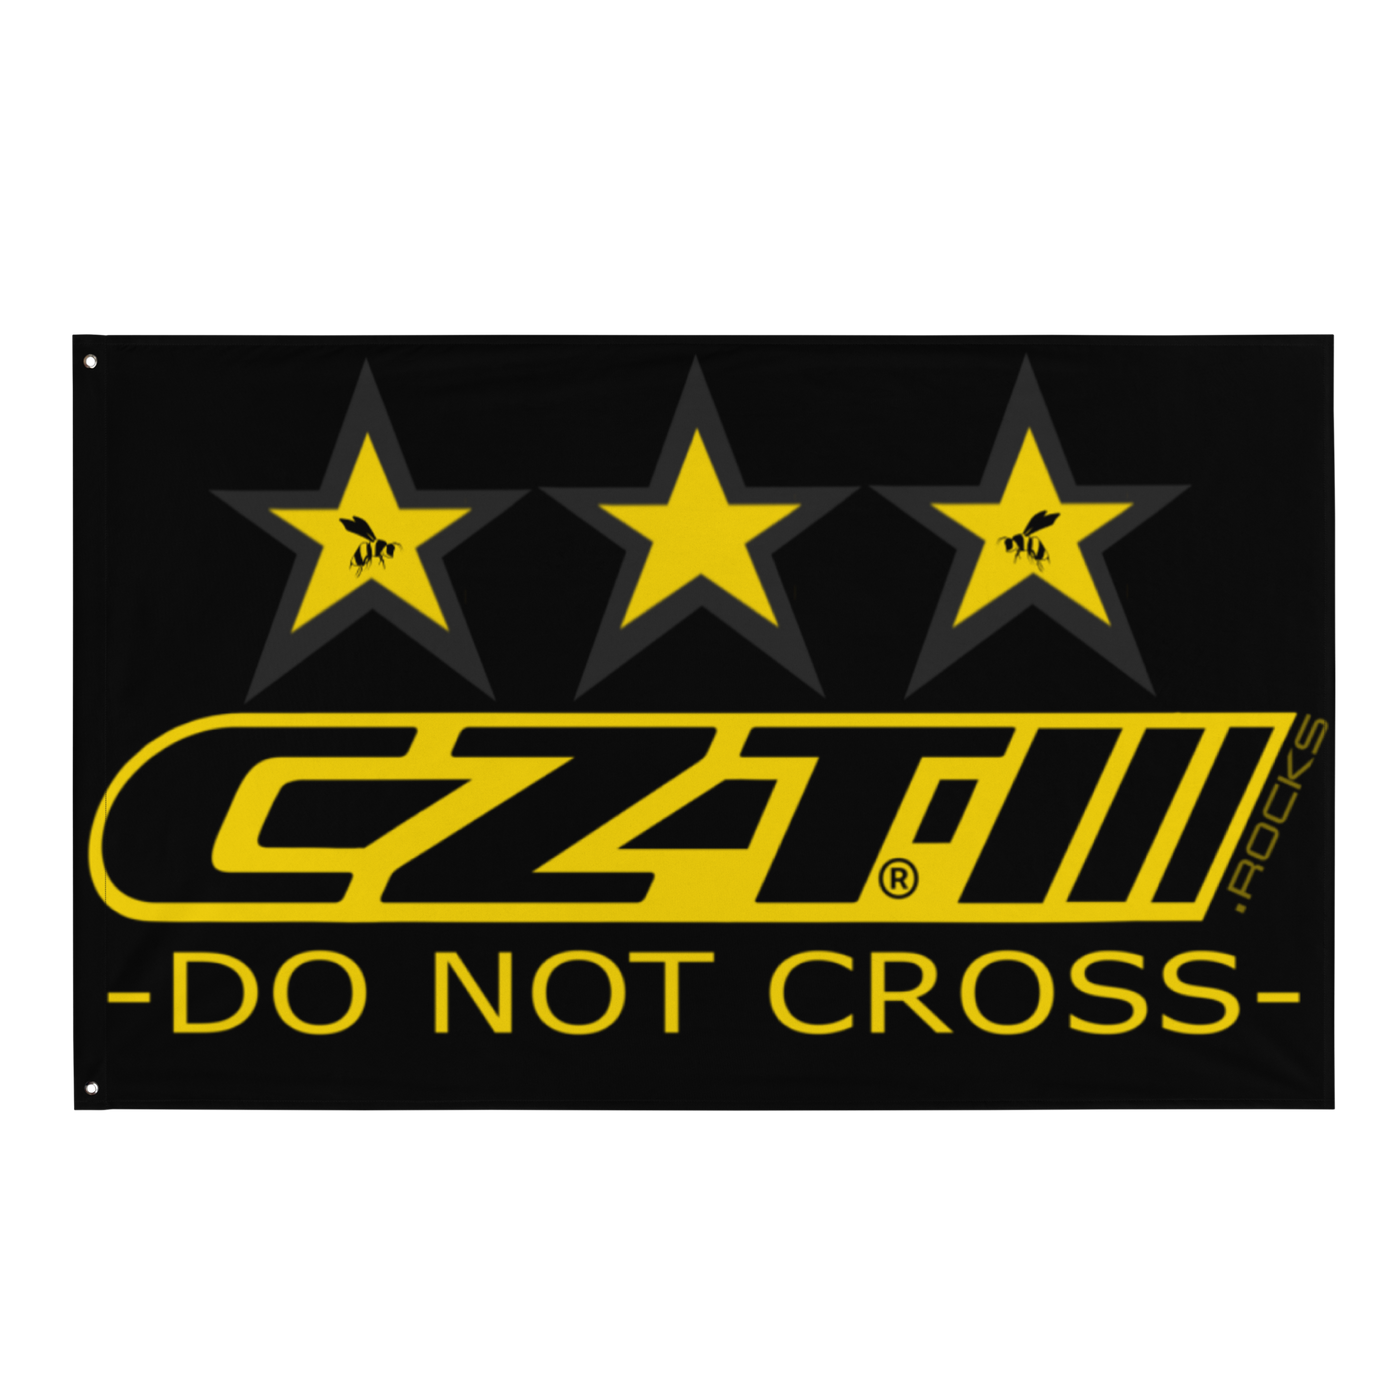 CZT DNC Neon Monochrome Brand Warning Flag